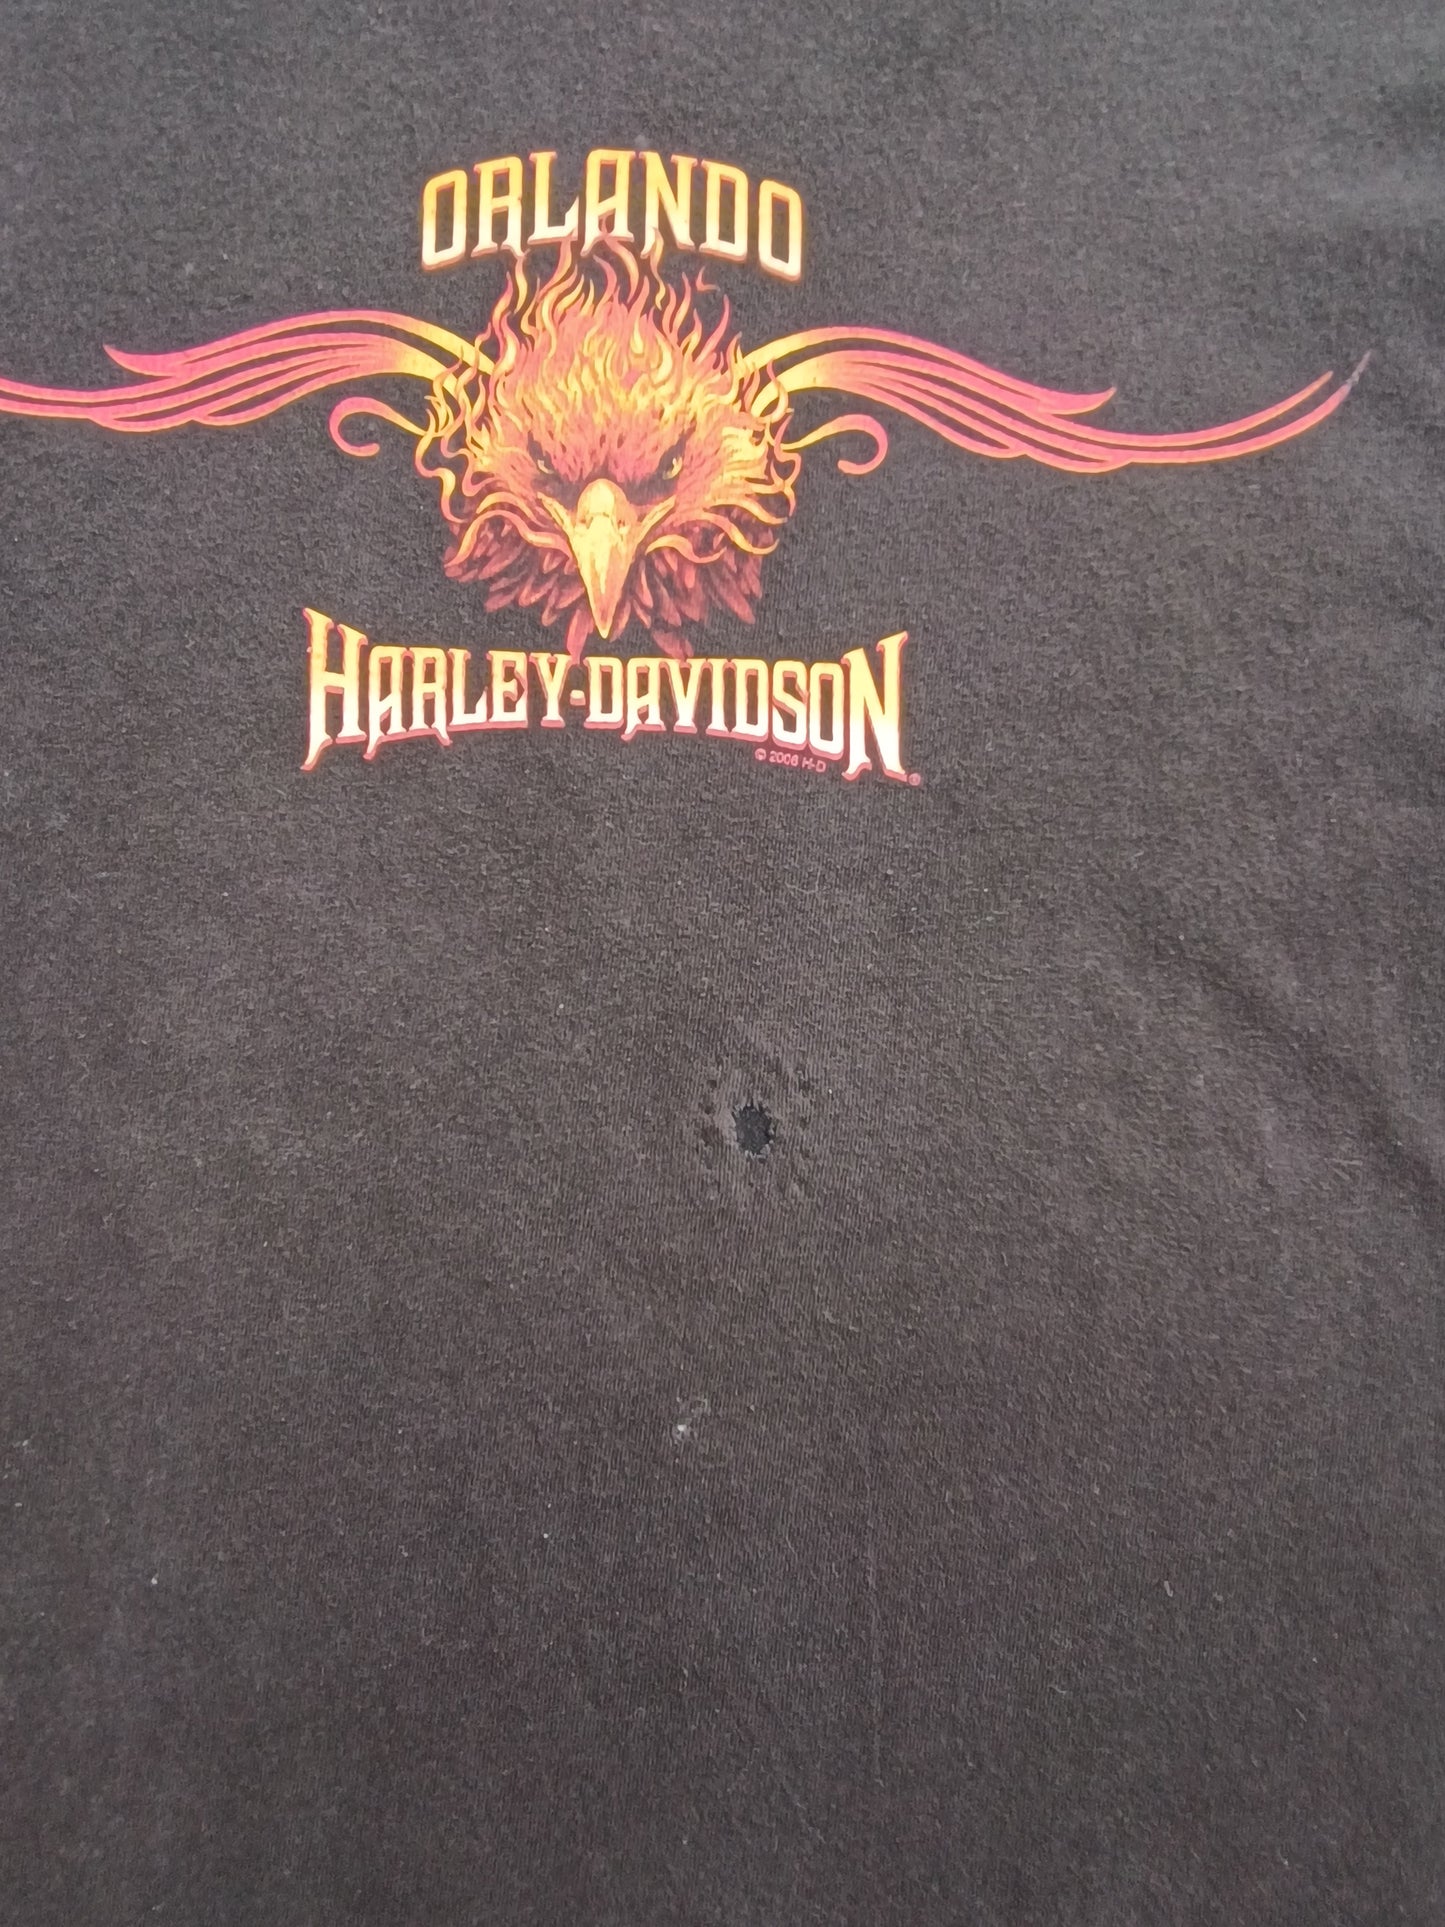 Harley Davidson Orlando - XL